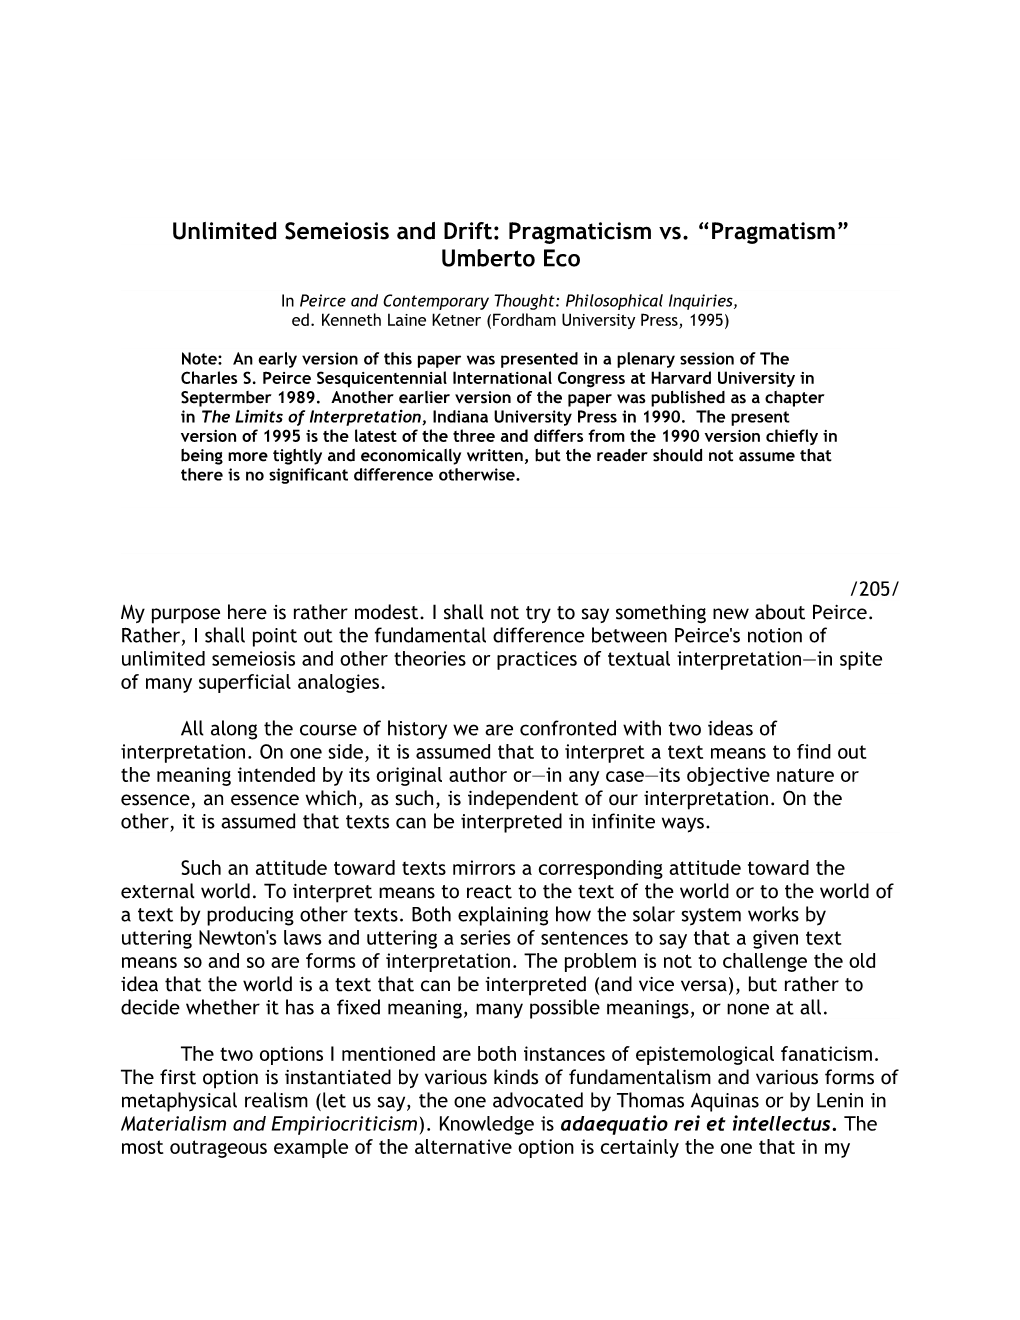 Unlimited Semeiosis and Drift: Pragmaticism Vs